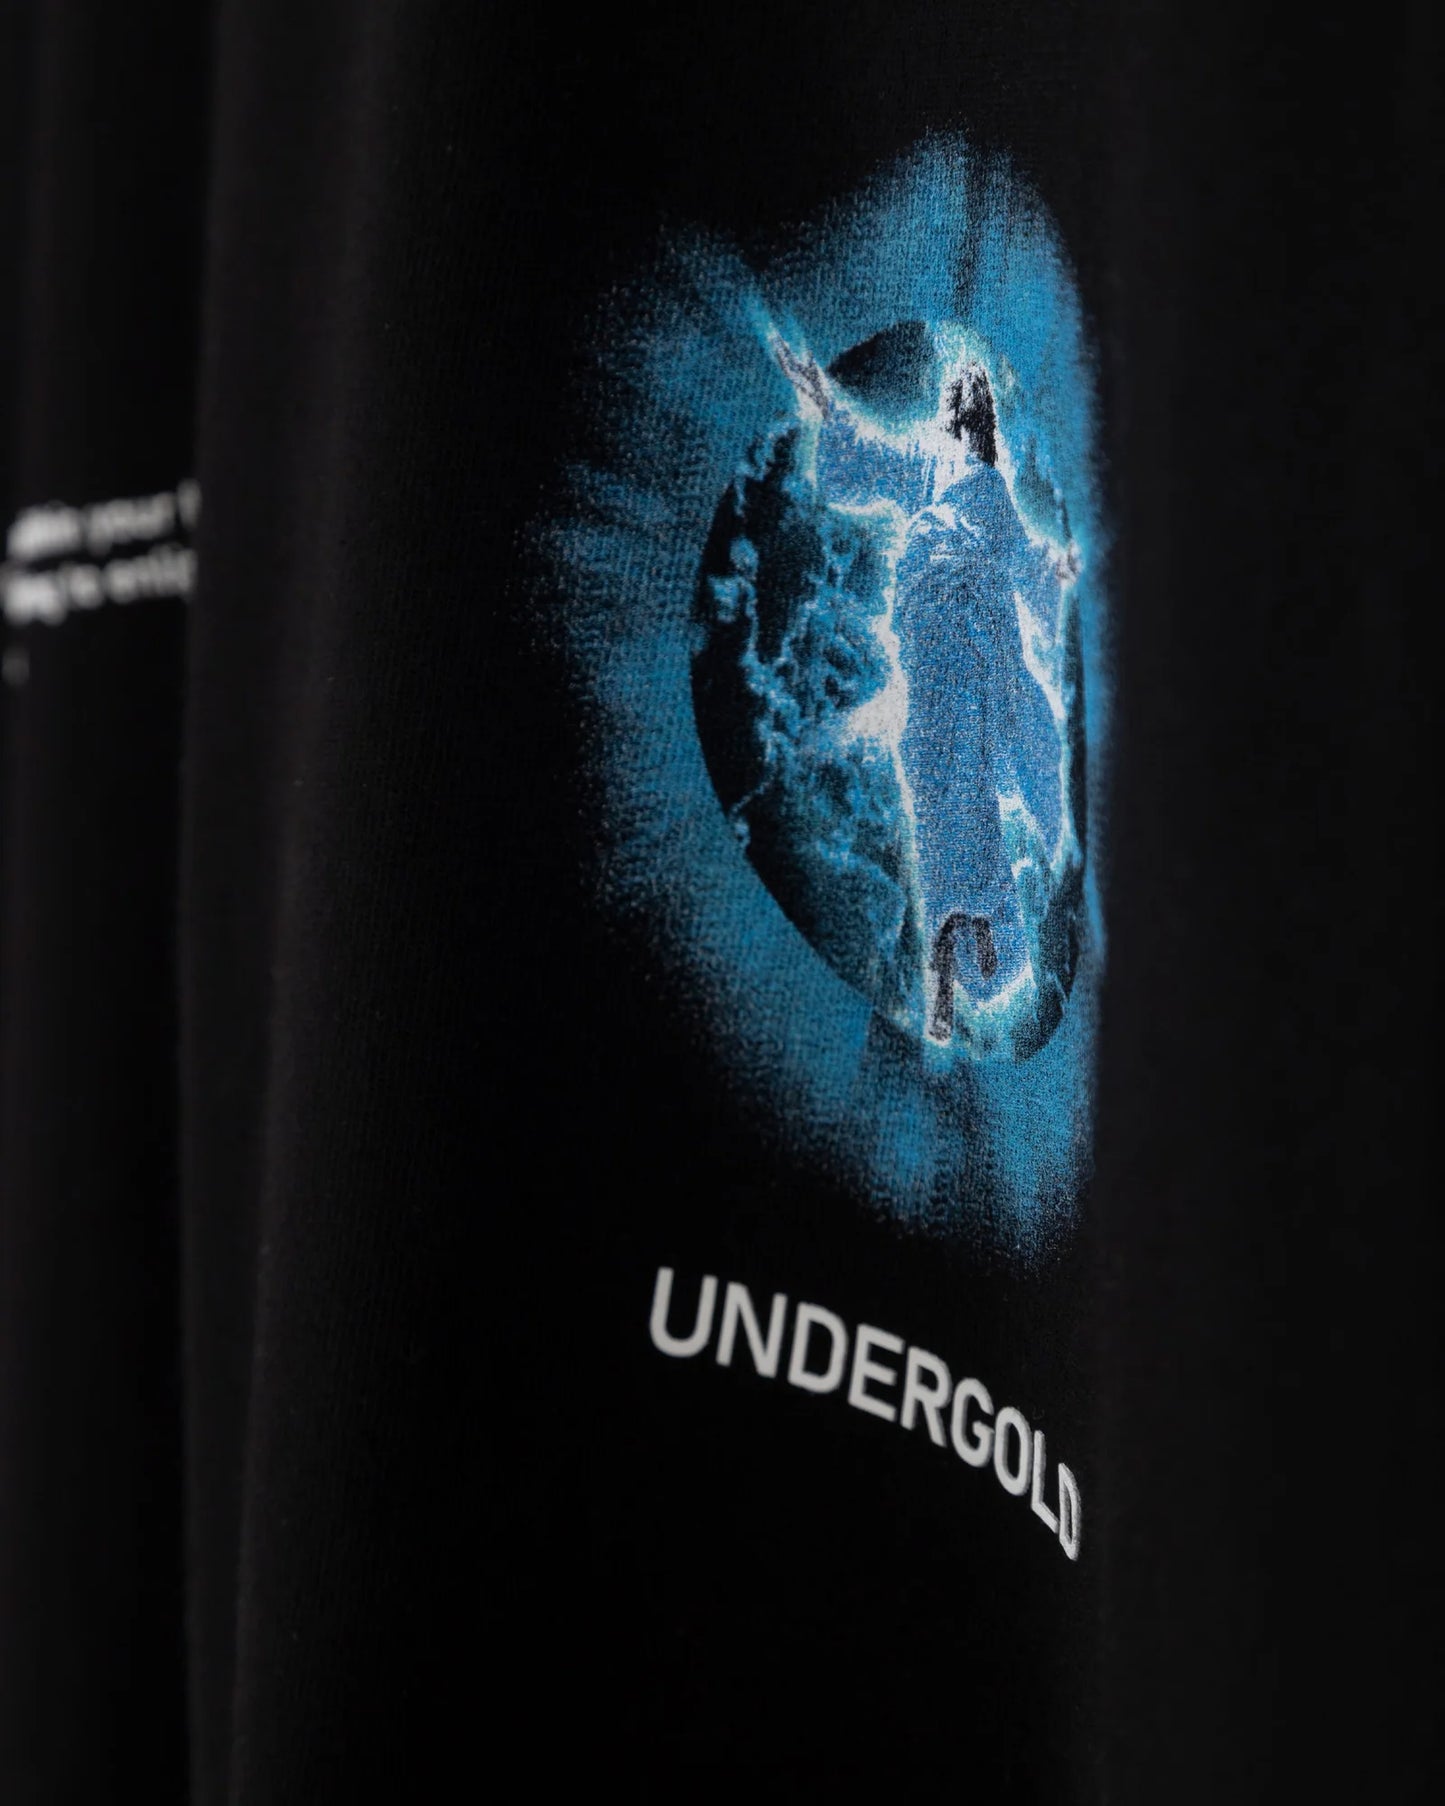 UNDERGOLD Genesis PT01 Savior T-shirt Black